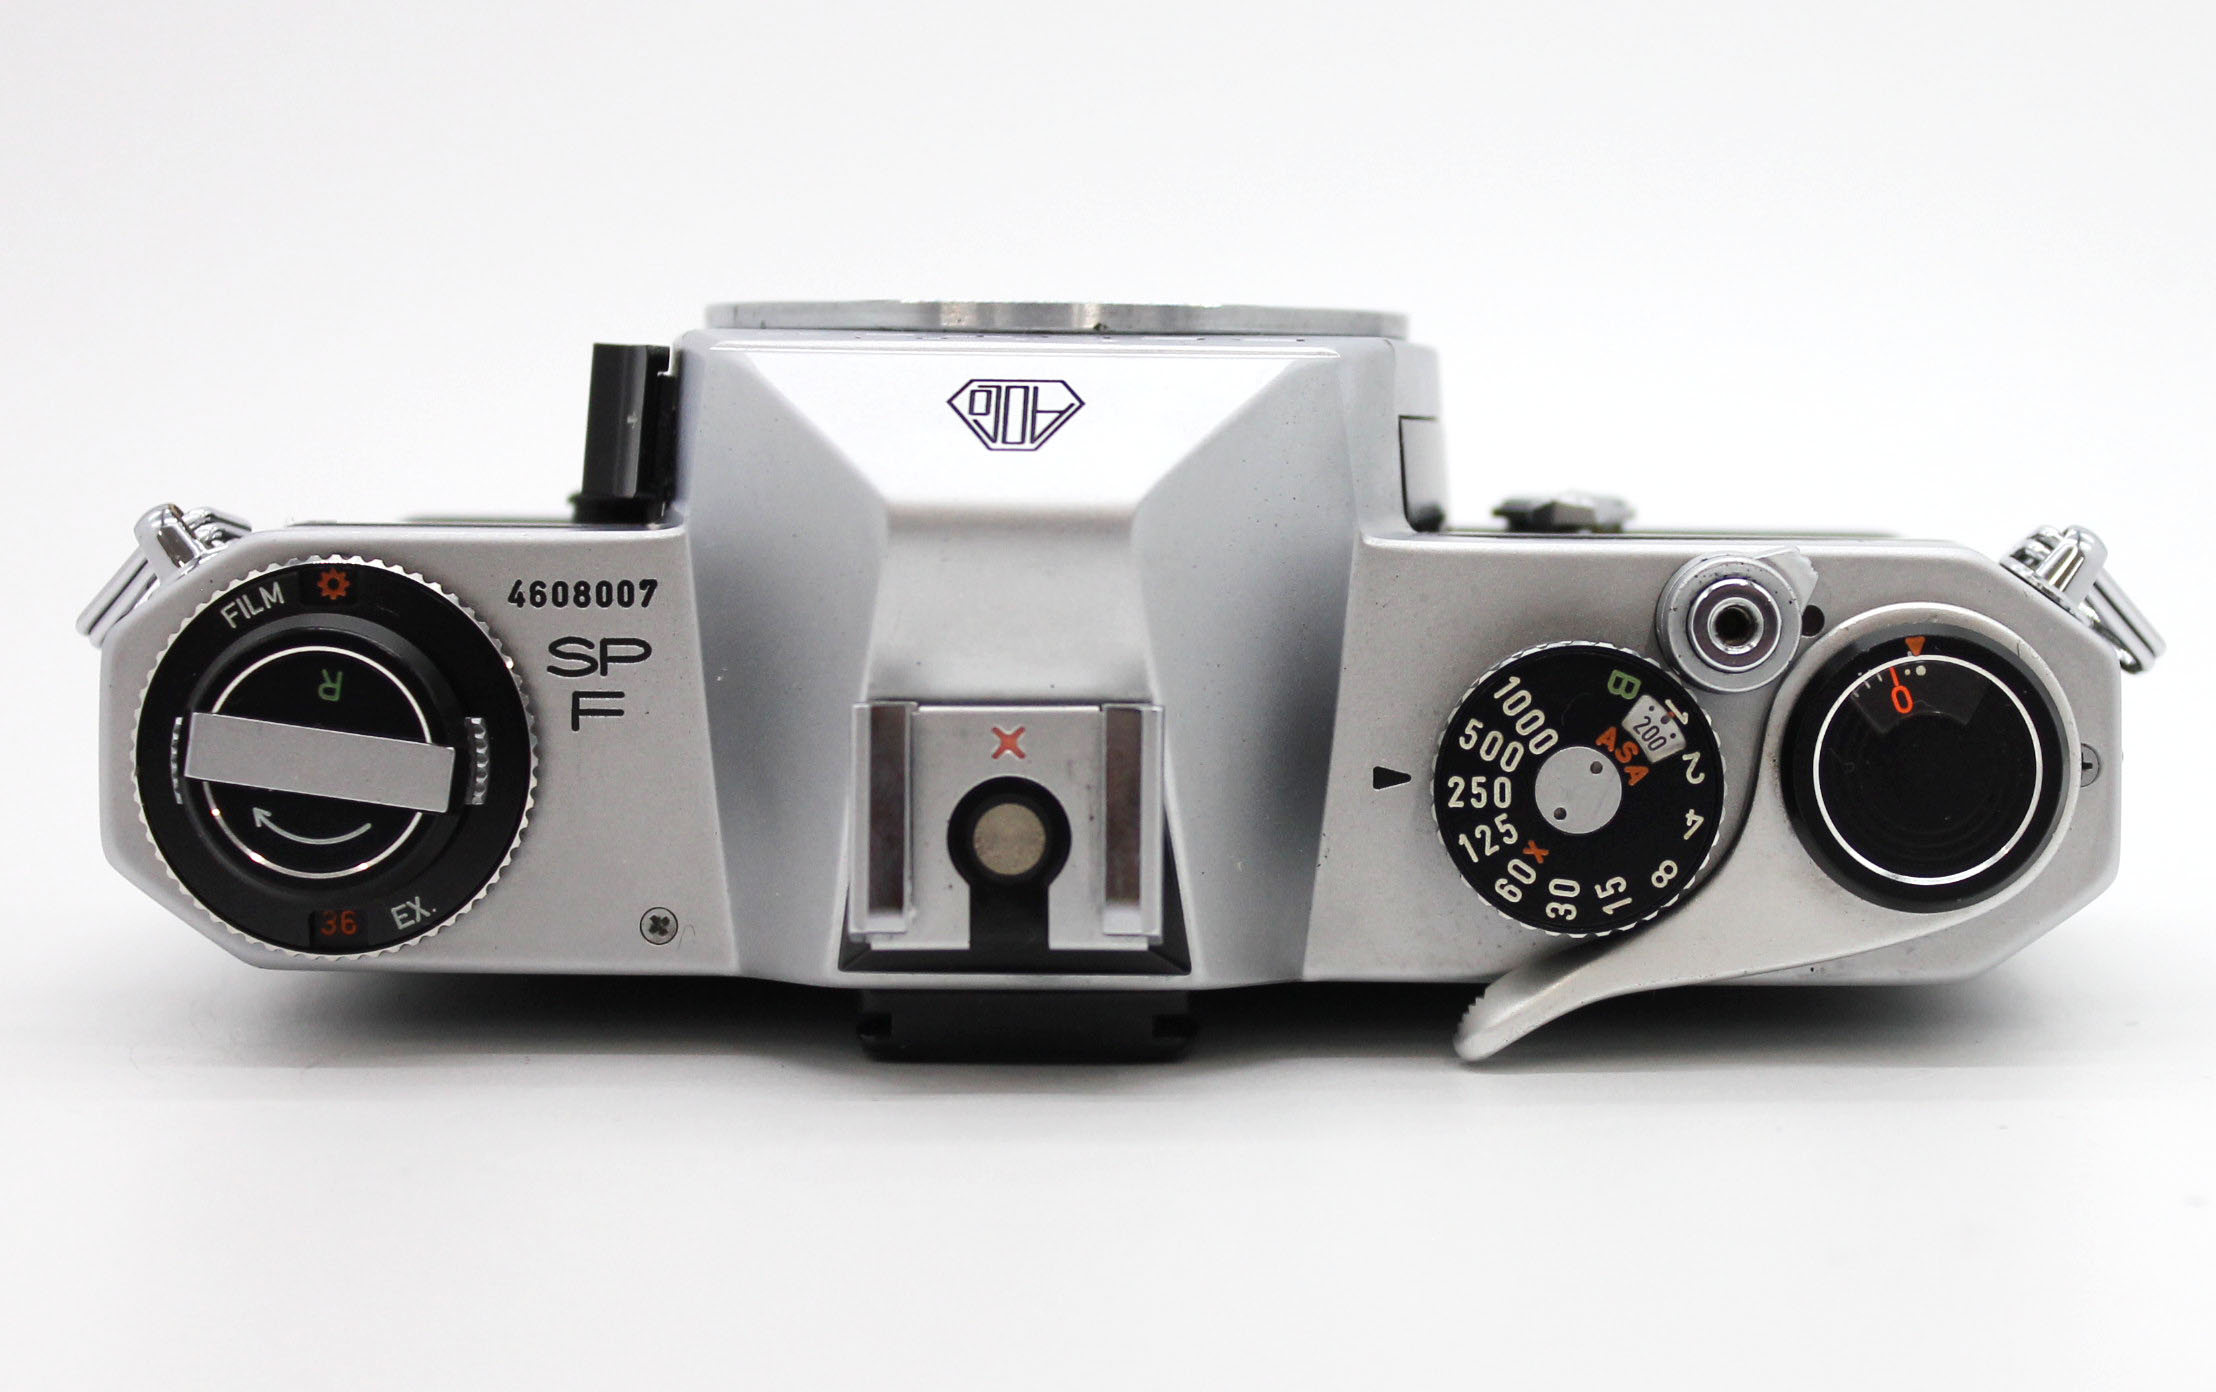 Asahi Pentax Spotmatic F SPF 35mm SLR Camera w/ SMC Takumar 55mm F/1.8 Lens from Japan Photo 7